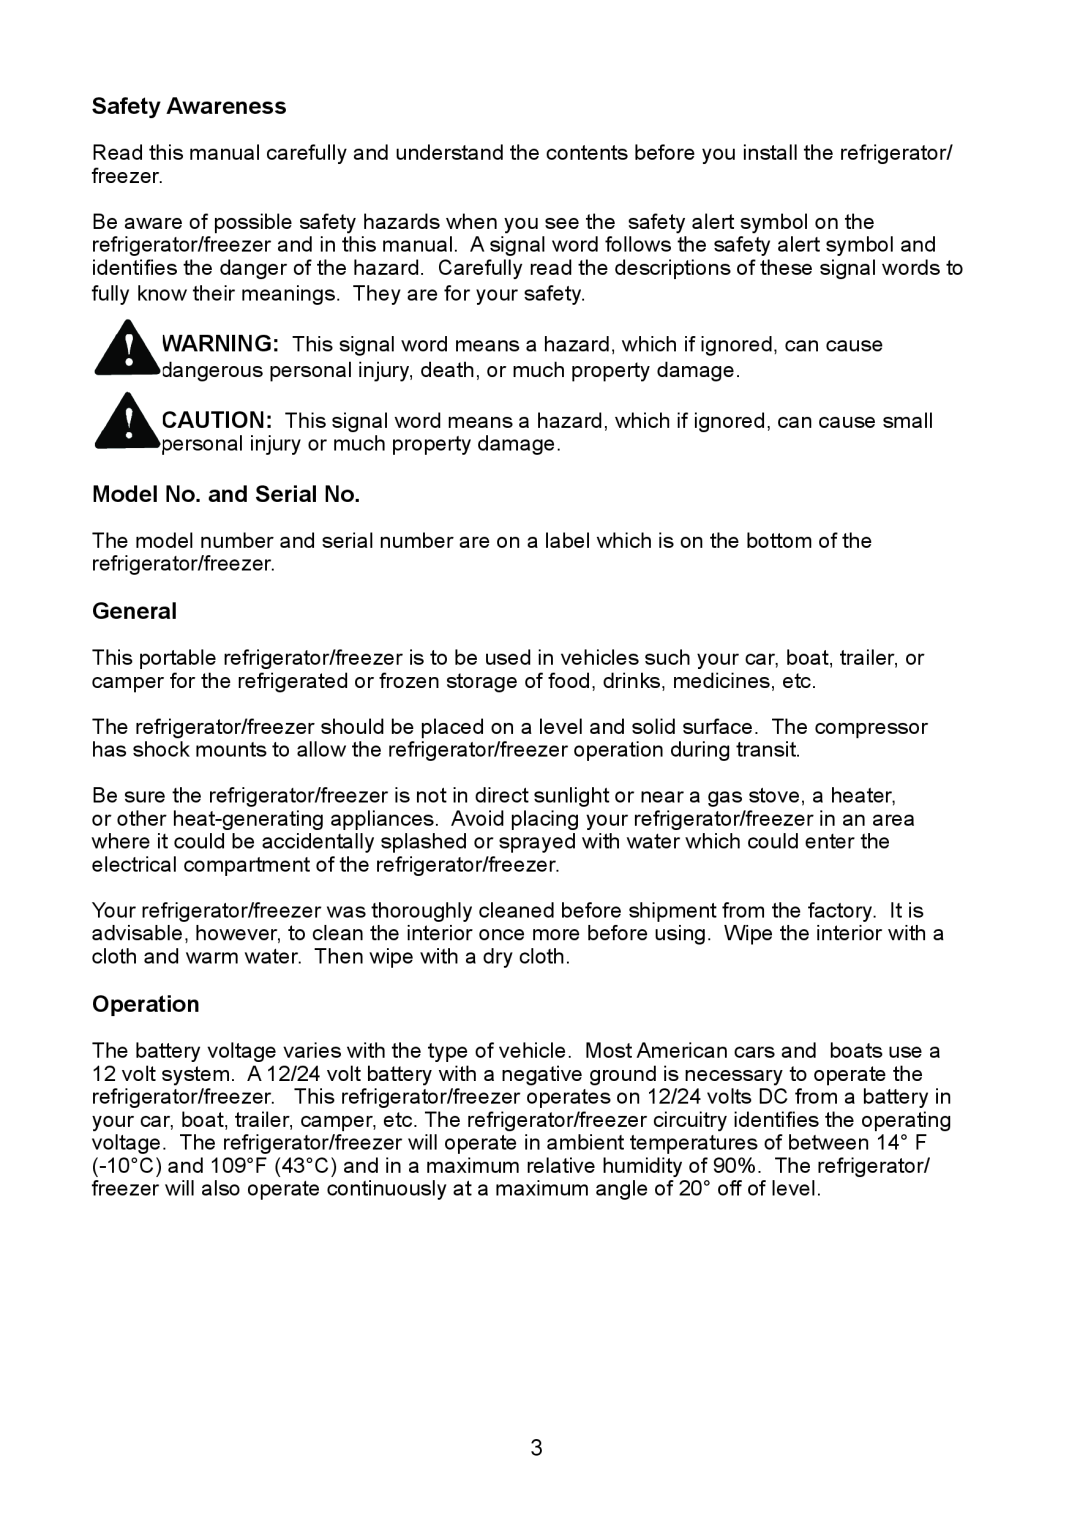 Norcold NRF30 manual Safety Awareness, Model No. and Serial No, General, Operation 